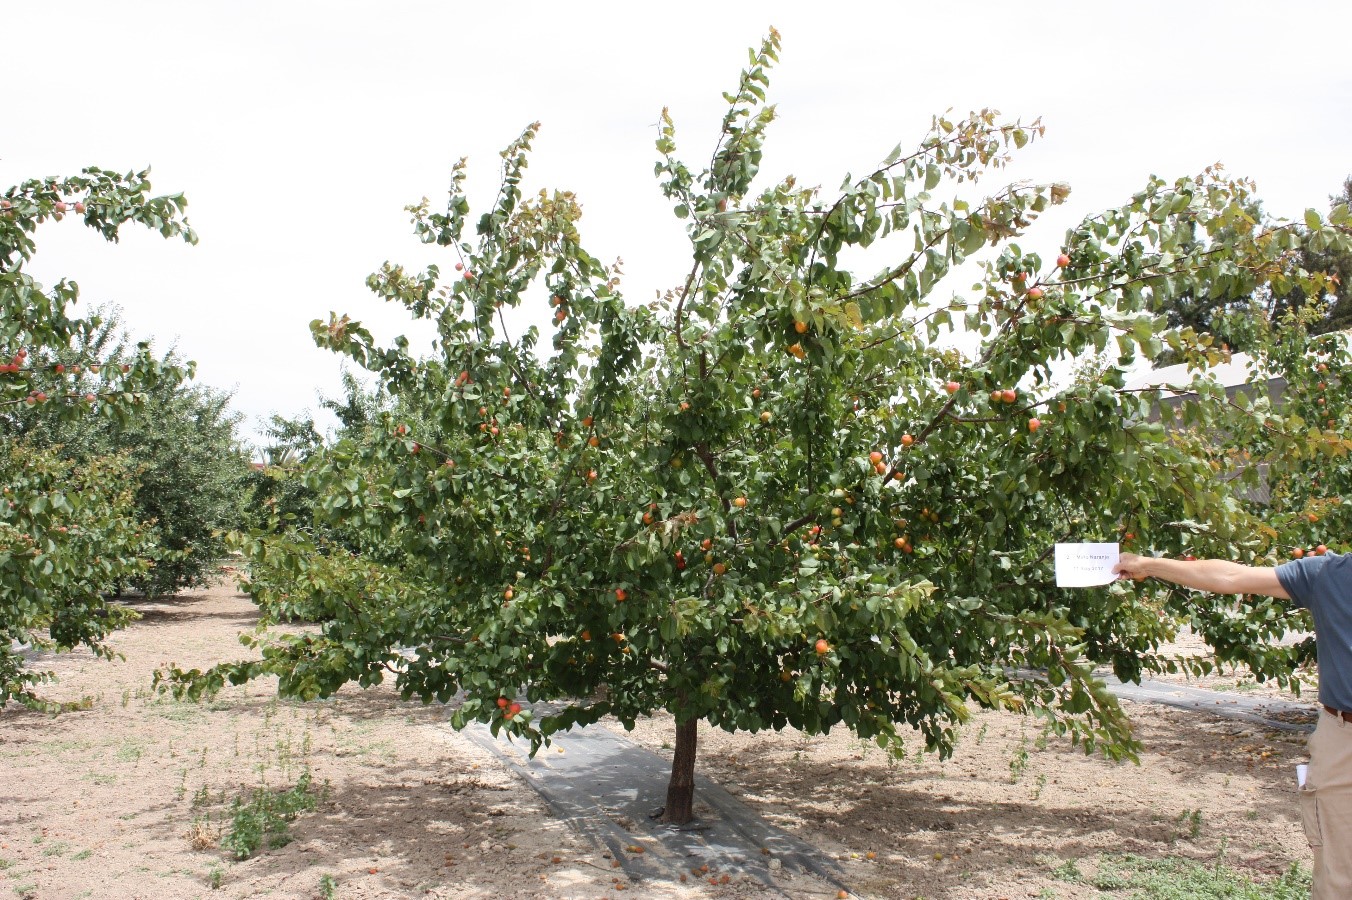 Detalle de árbol variedad Mirlo naranja 2017